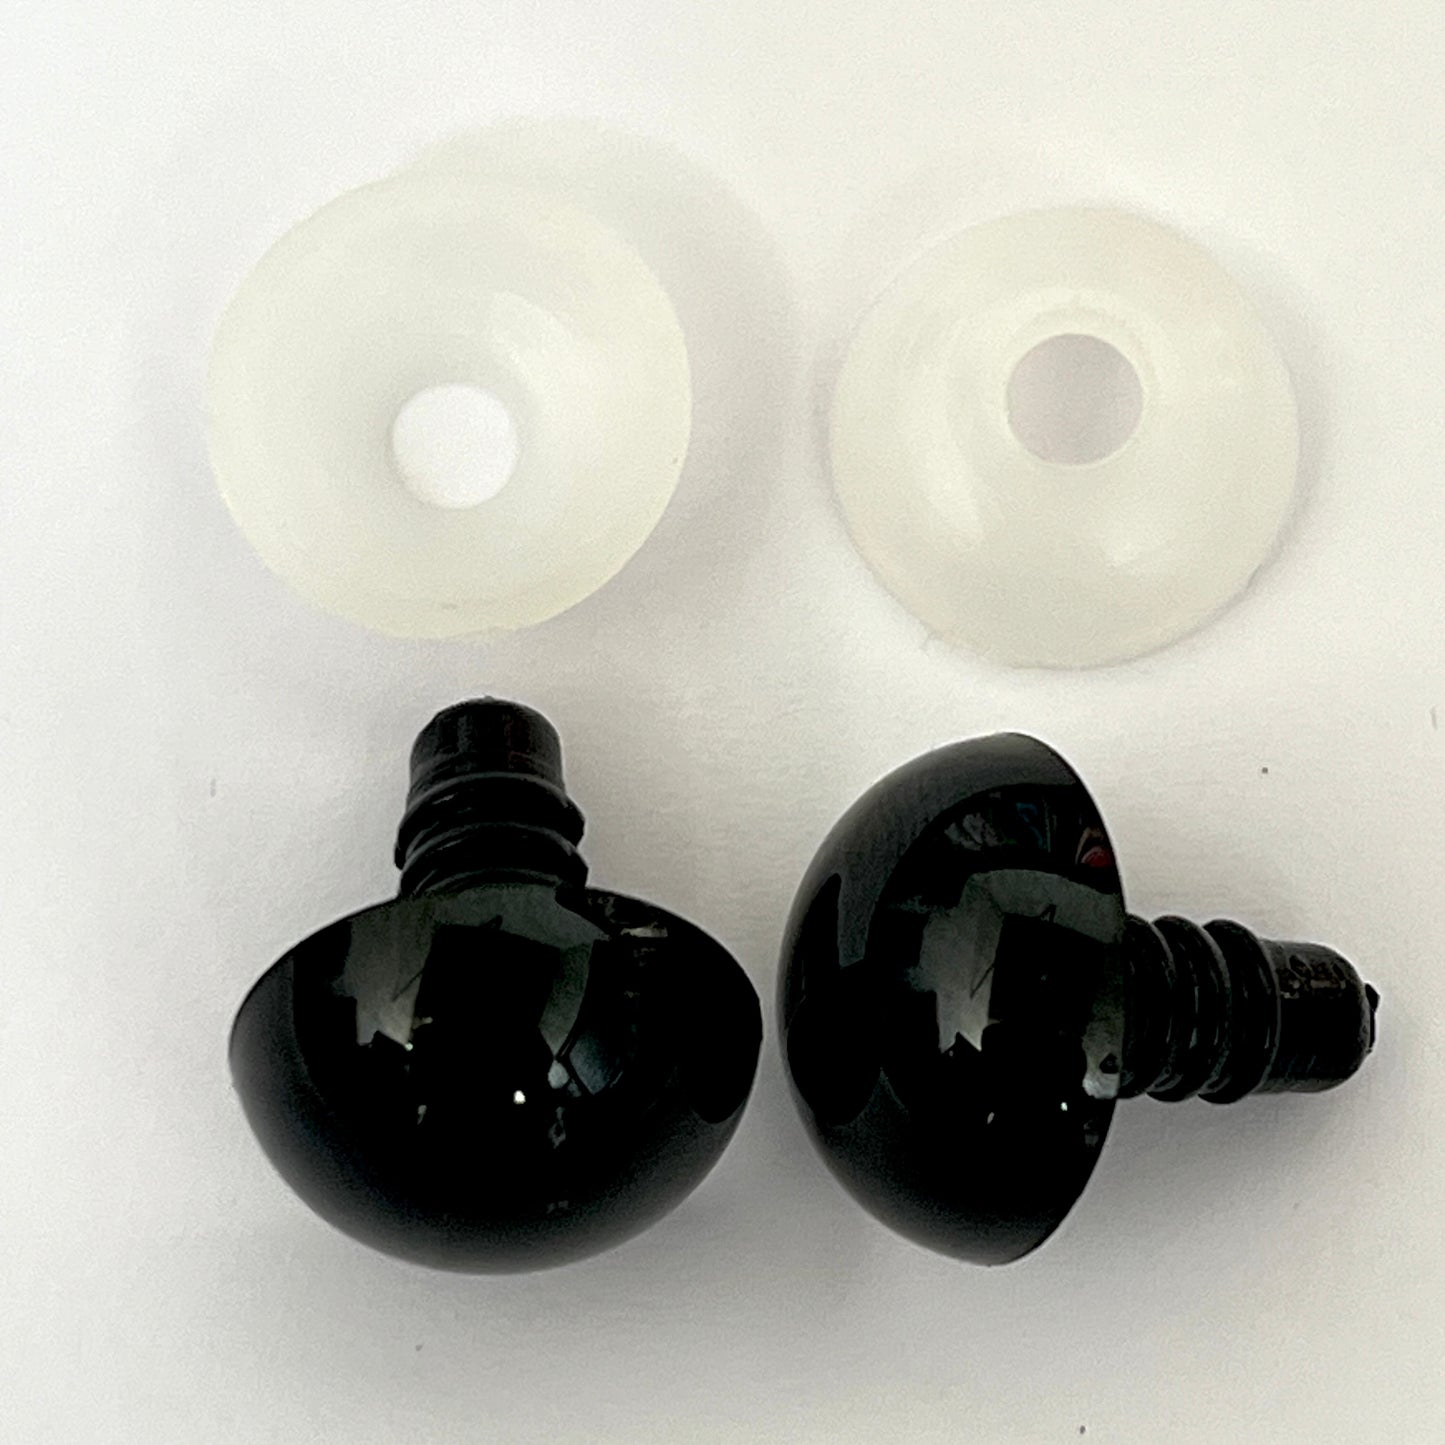 NEW 18mm Black Toy Safety Eyes - EN71, REACH & Annex II Compliant